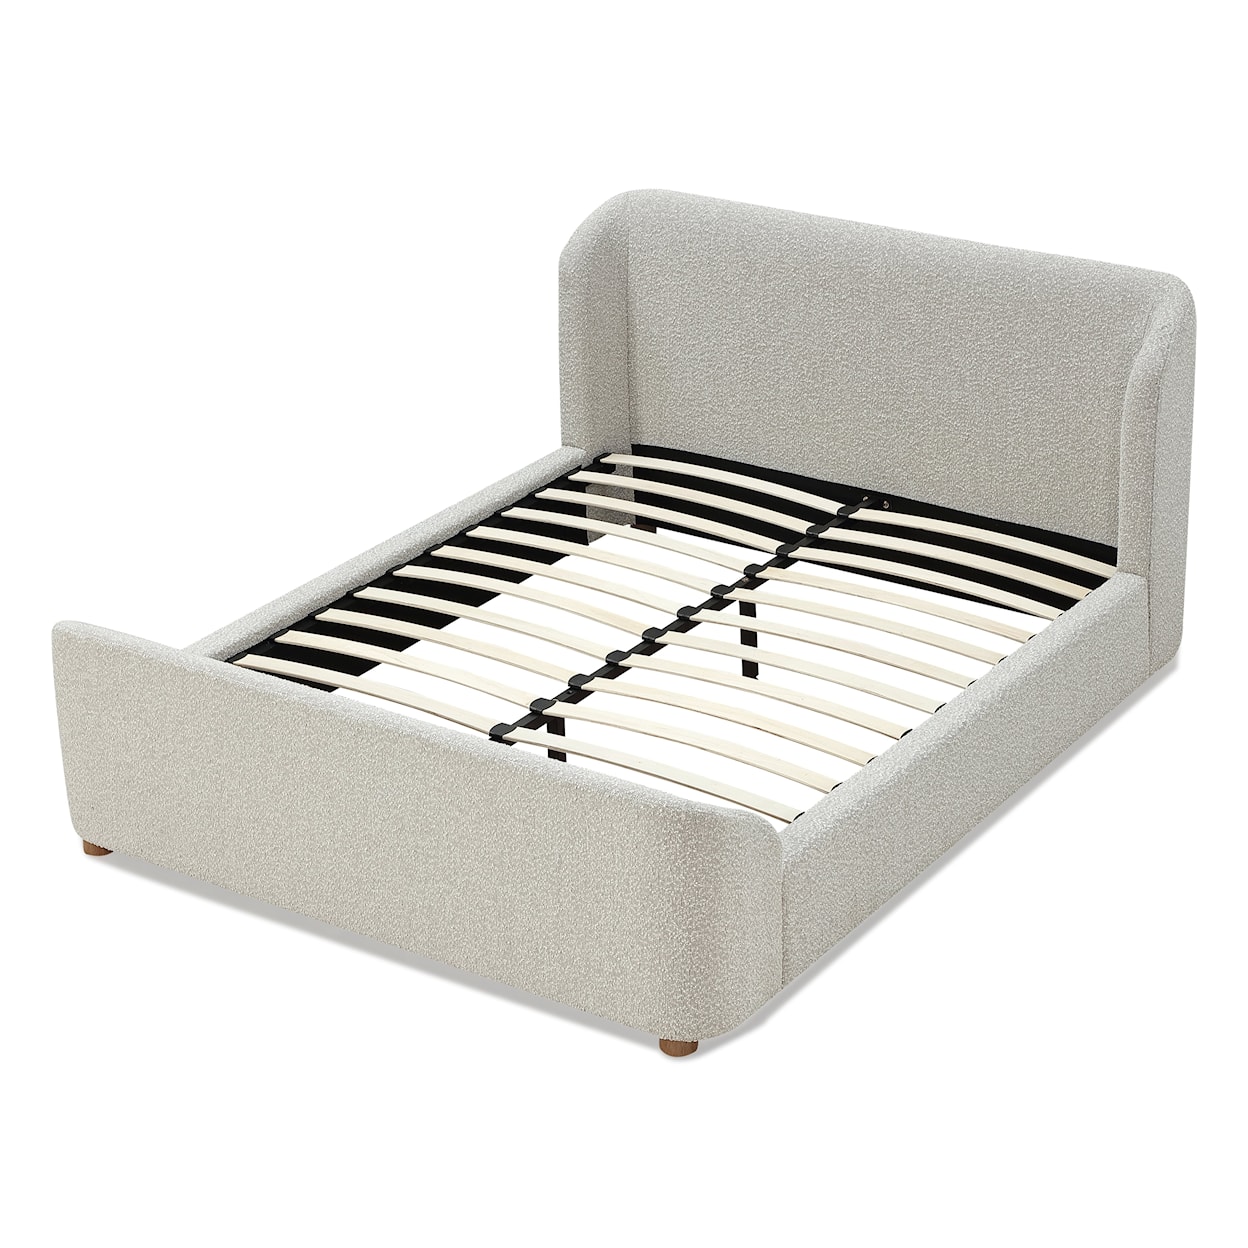 Modus International Kiki King Upholstered Platform Bed